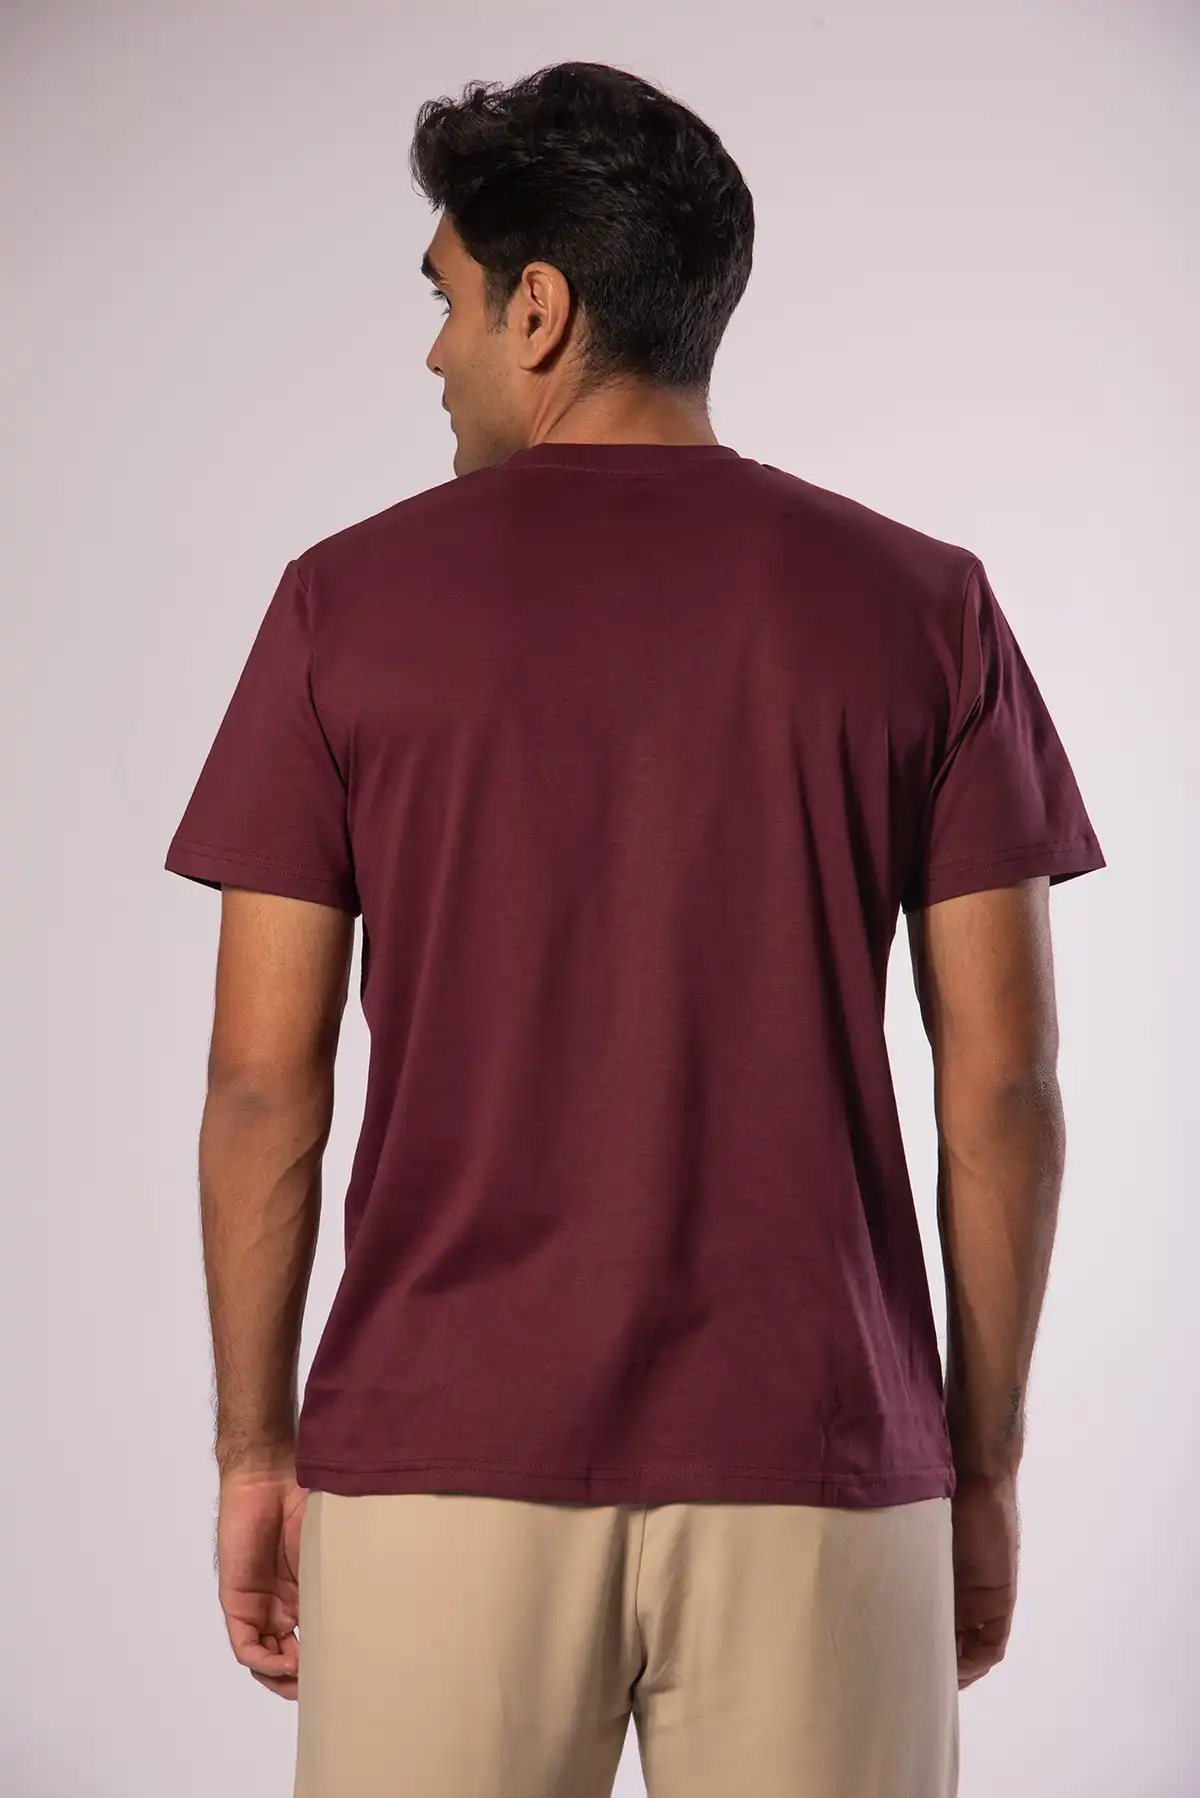 Unisex Crew Neck Cotton T-Shirt - Ruby Wine